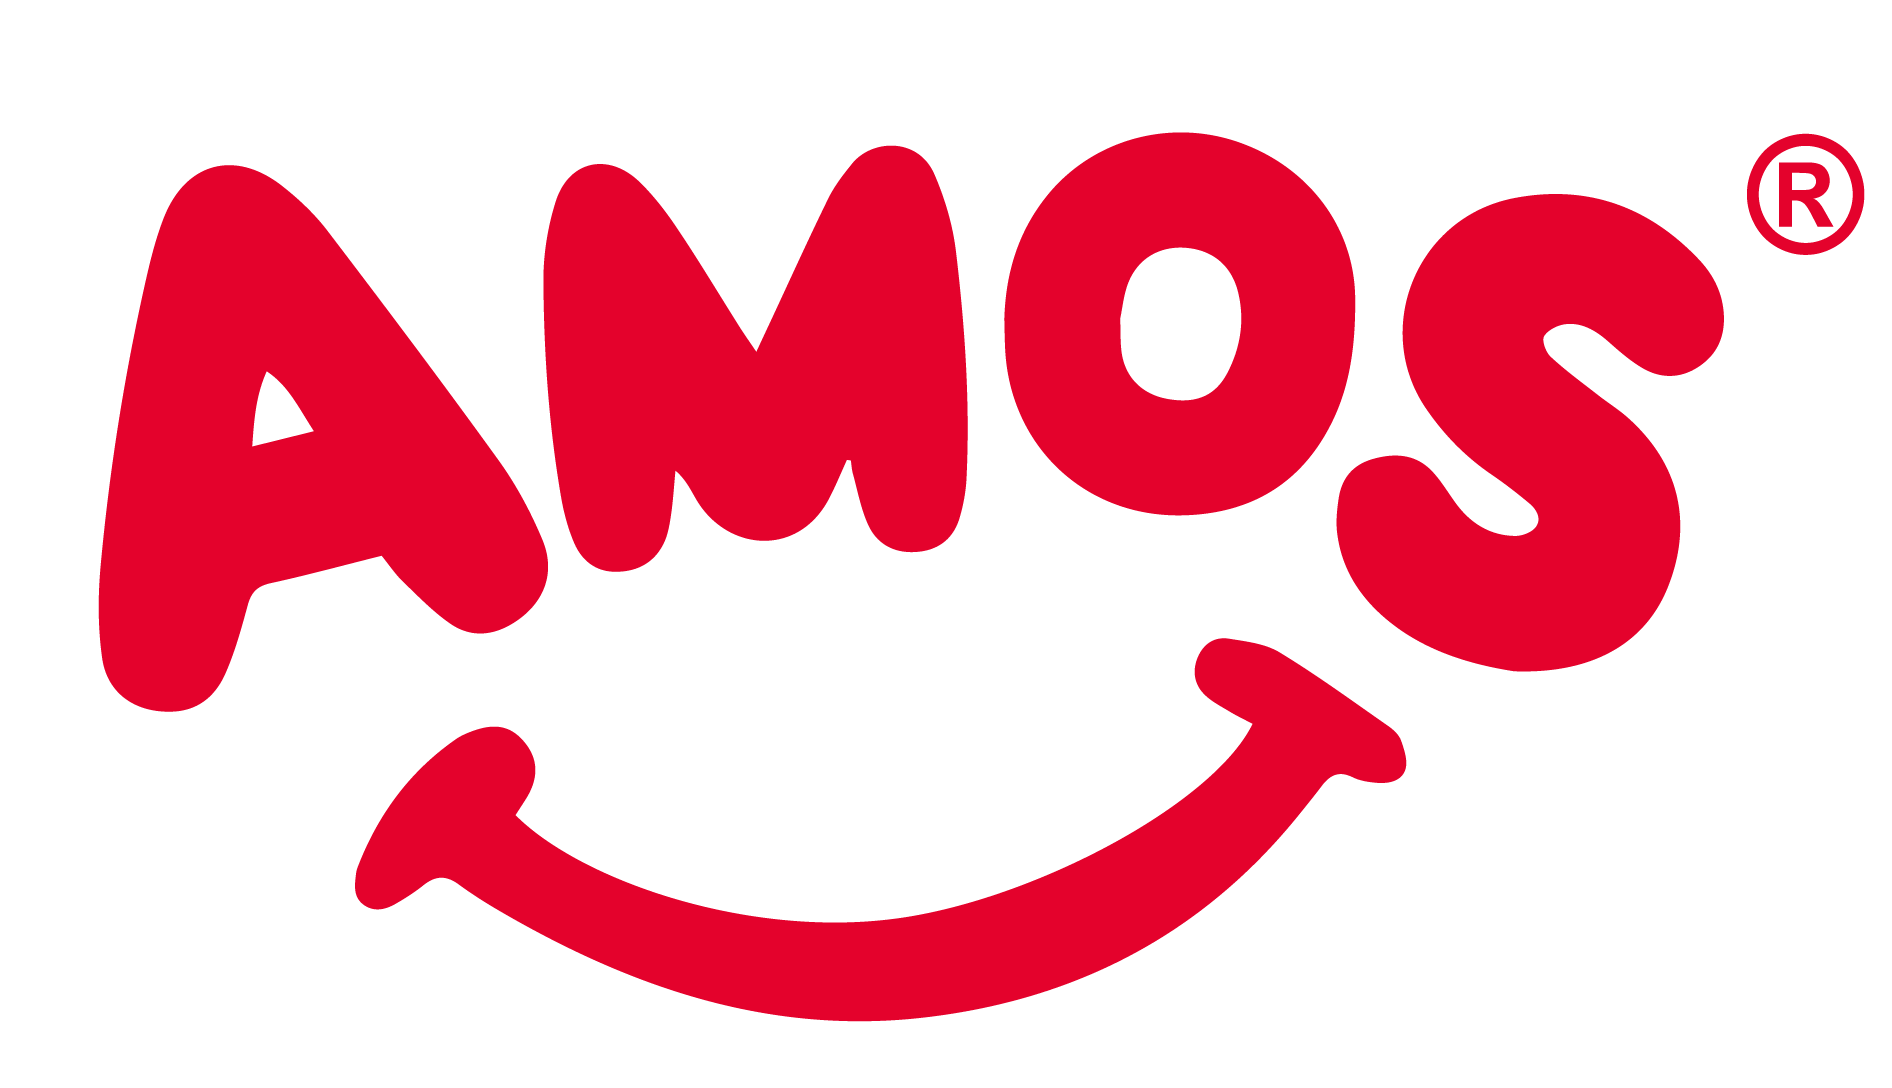 Amos Sweets